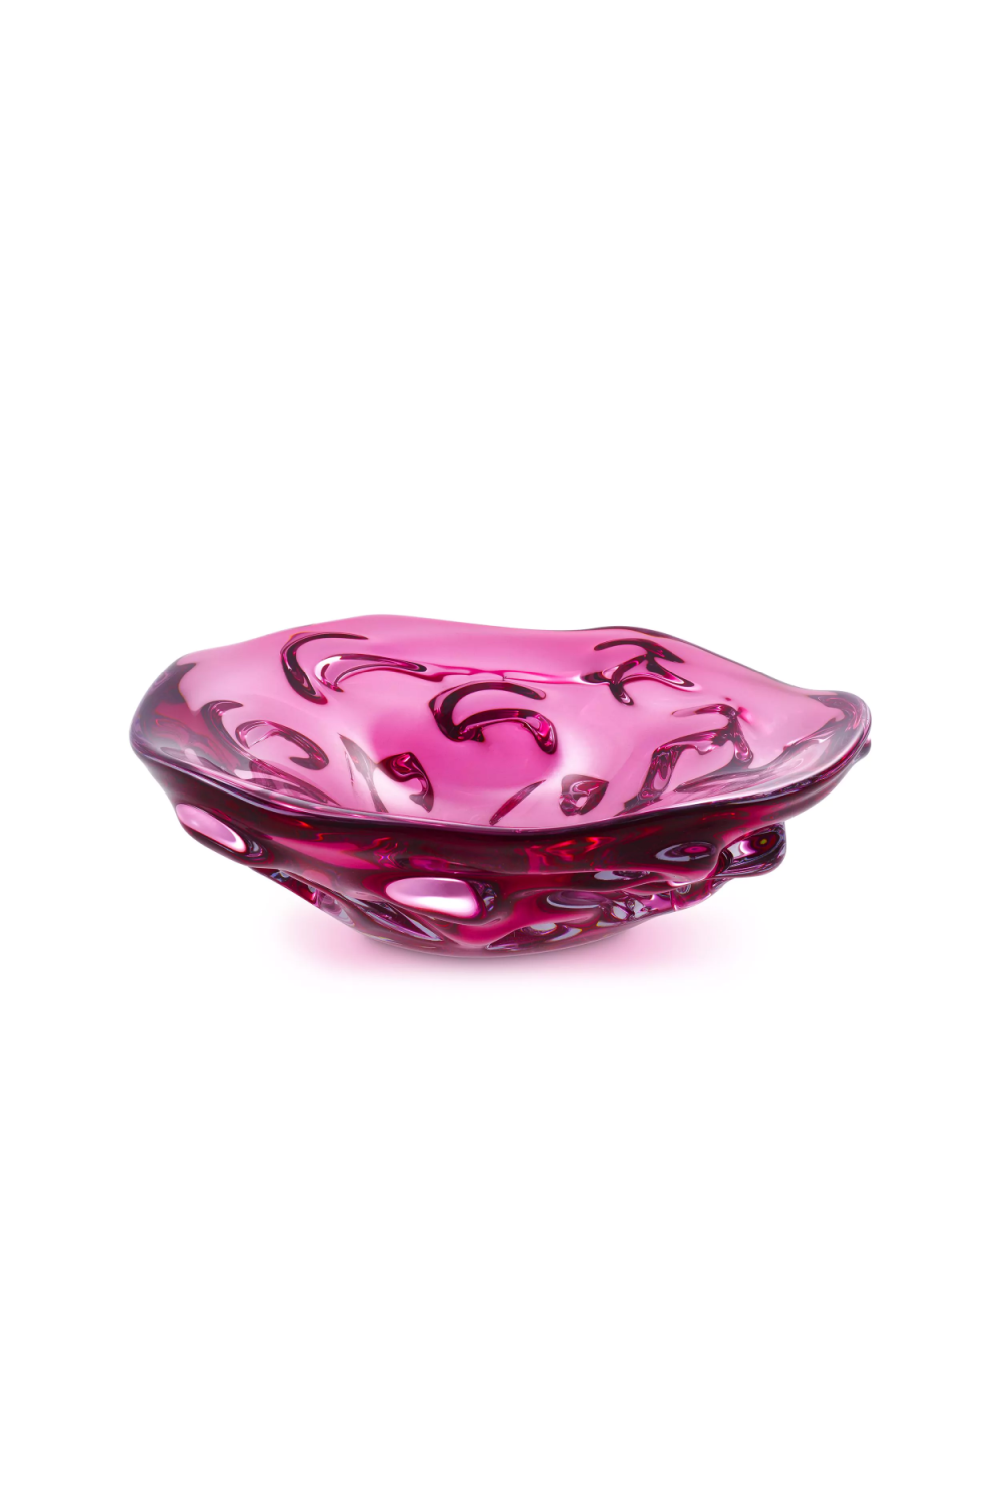 Modern Glass Bowl S | Eichholtz Kane | OROA.com